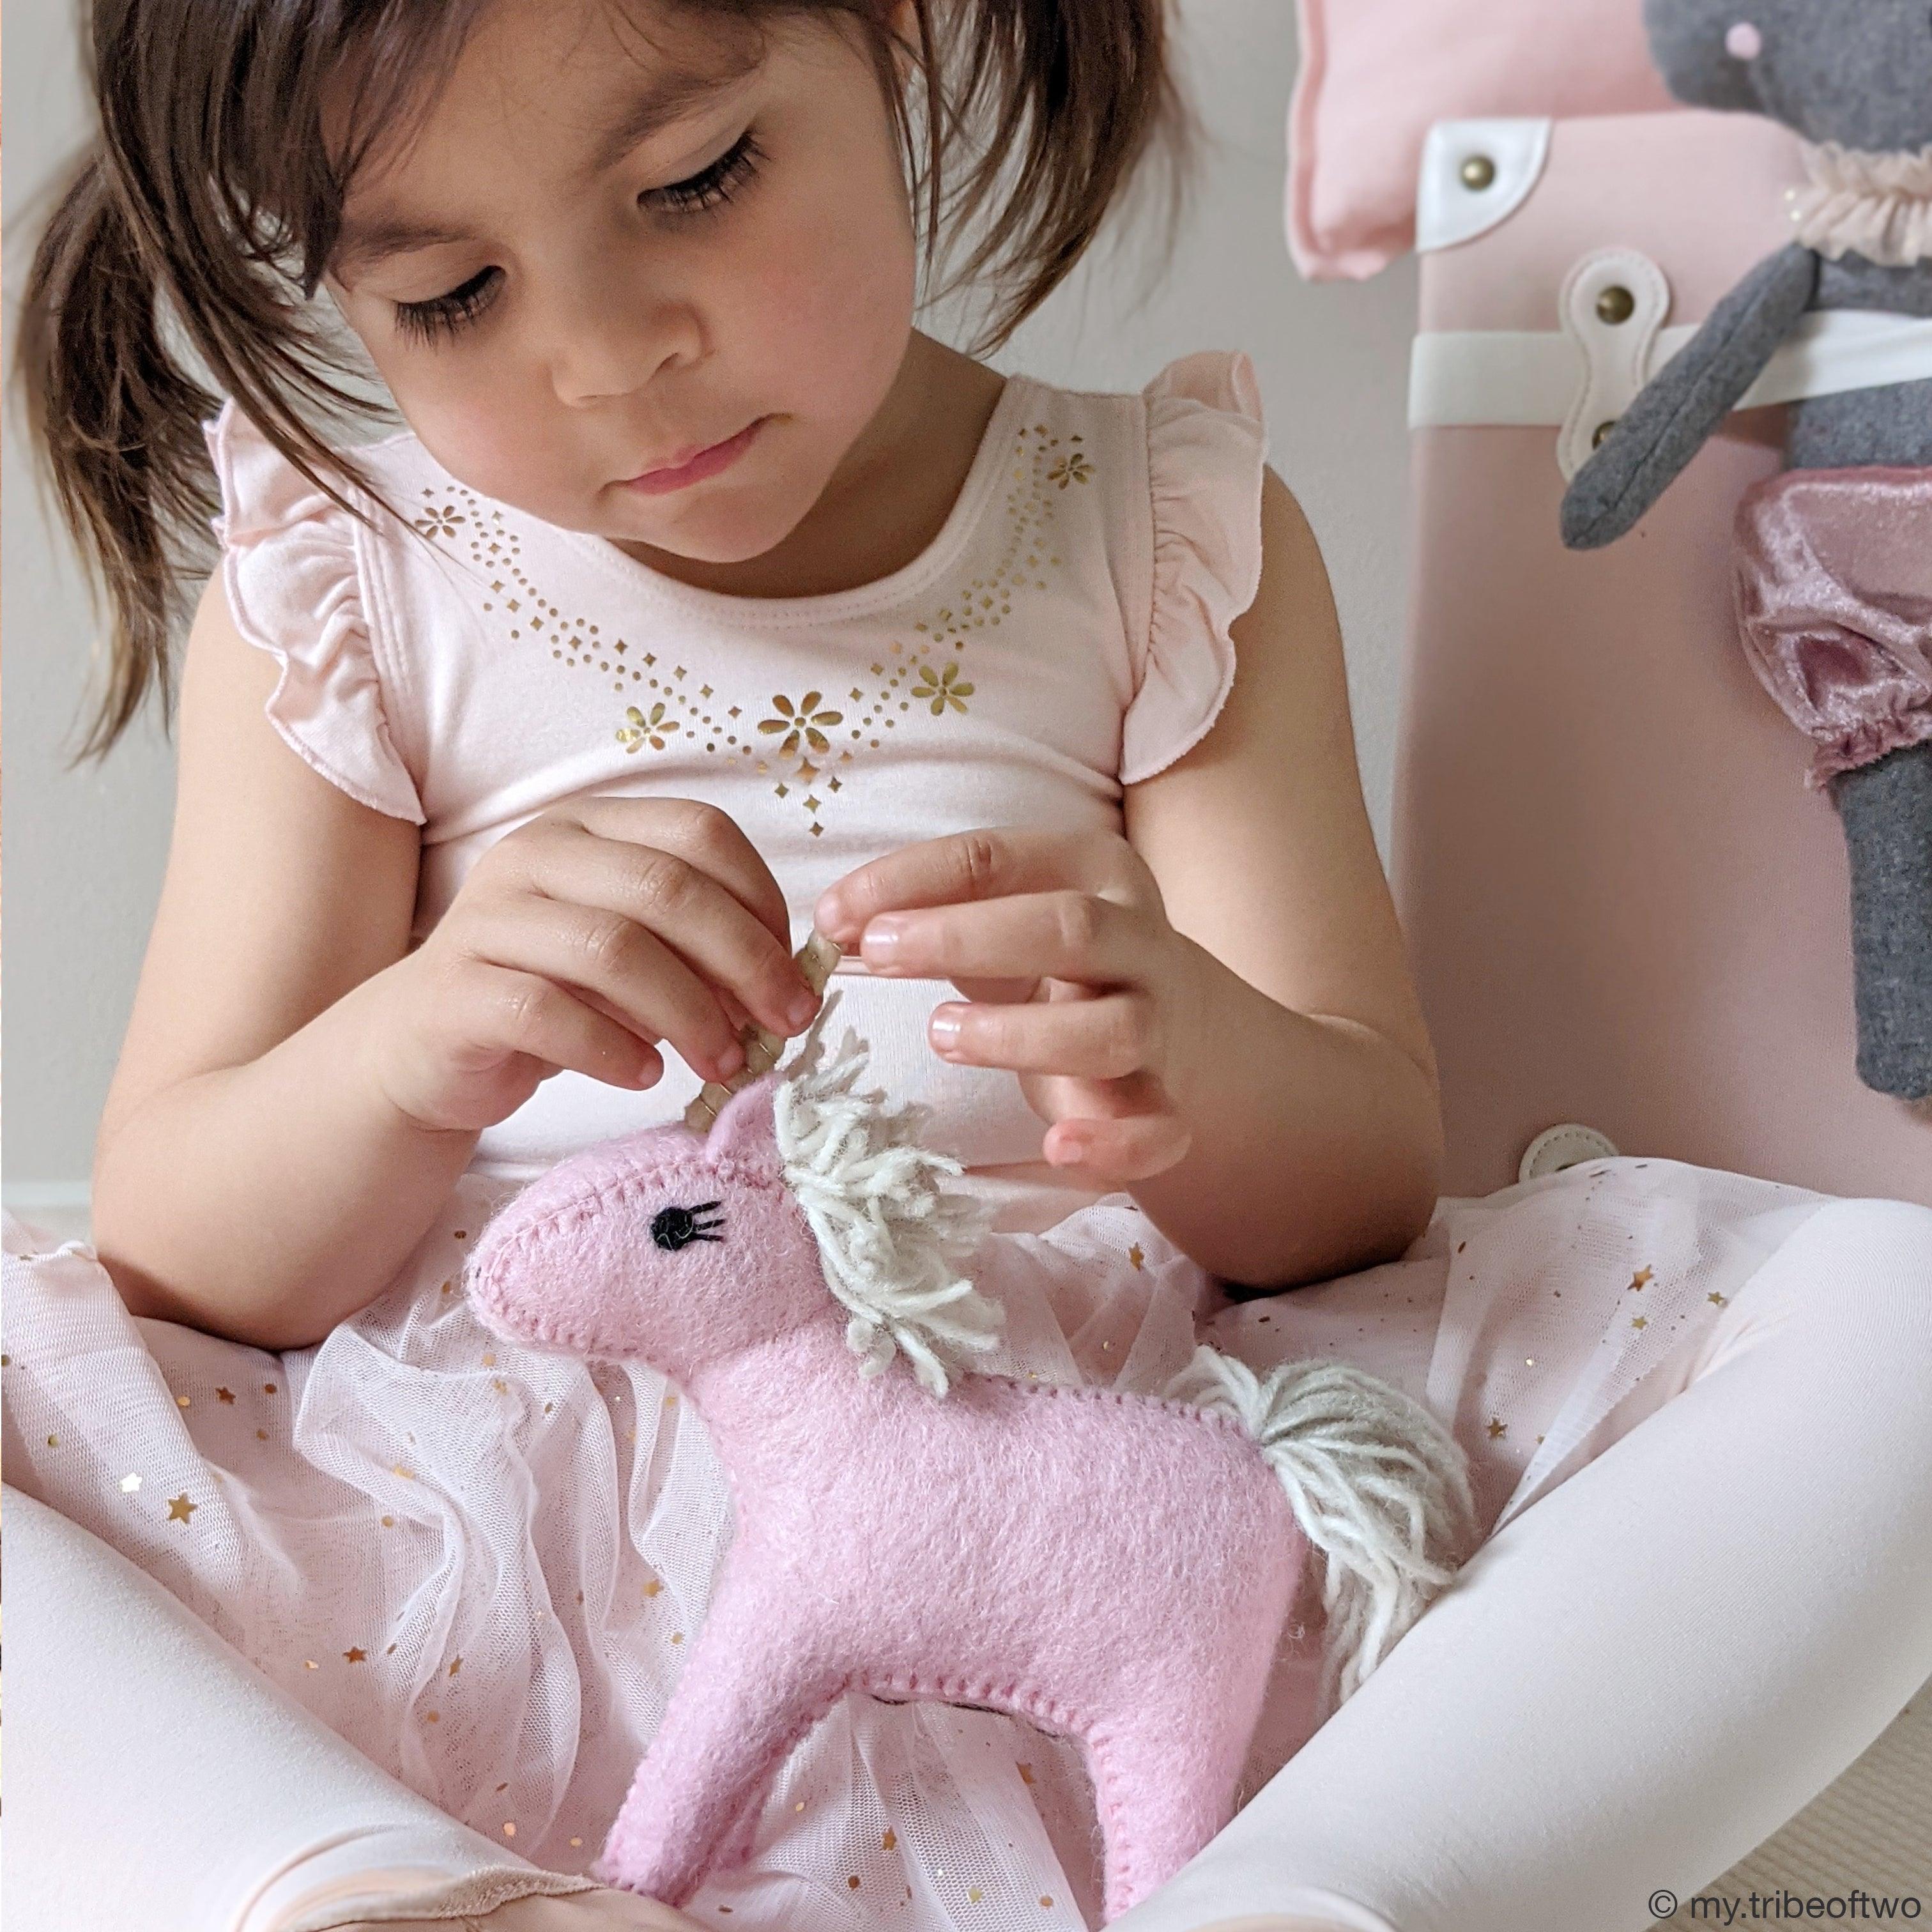 Felt Pink Unicorn Toy - Tara Treasures